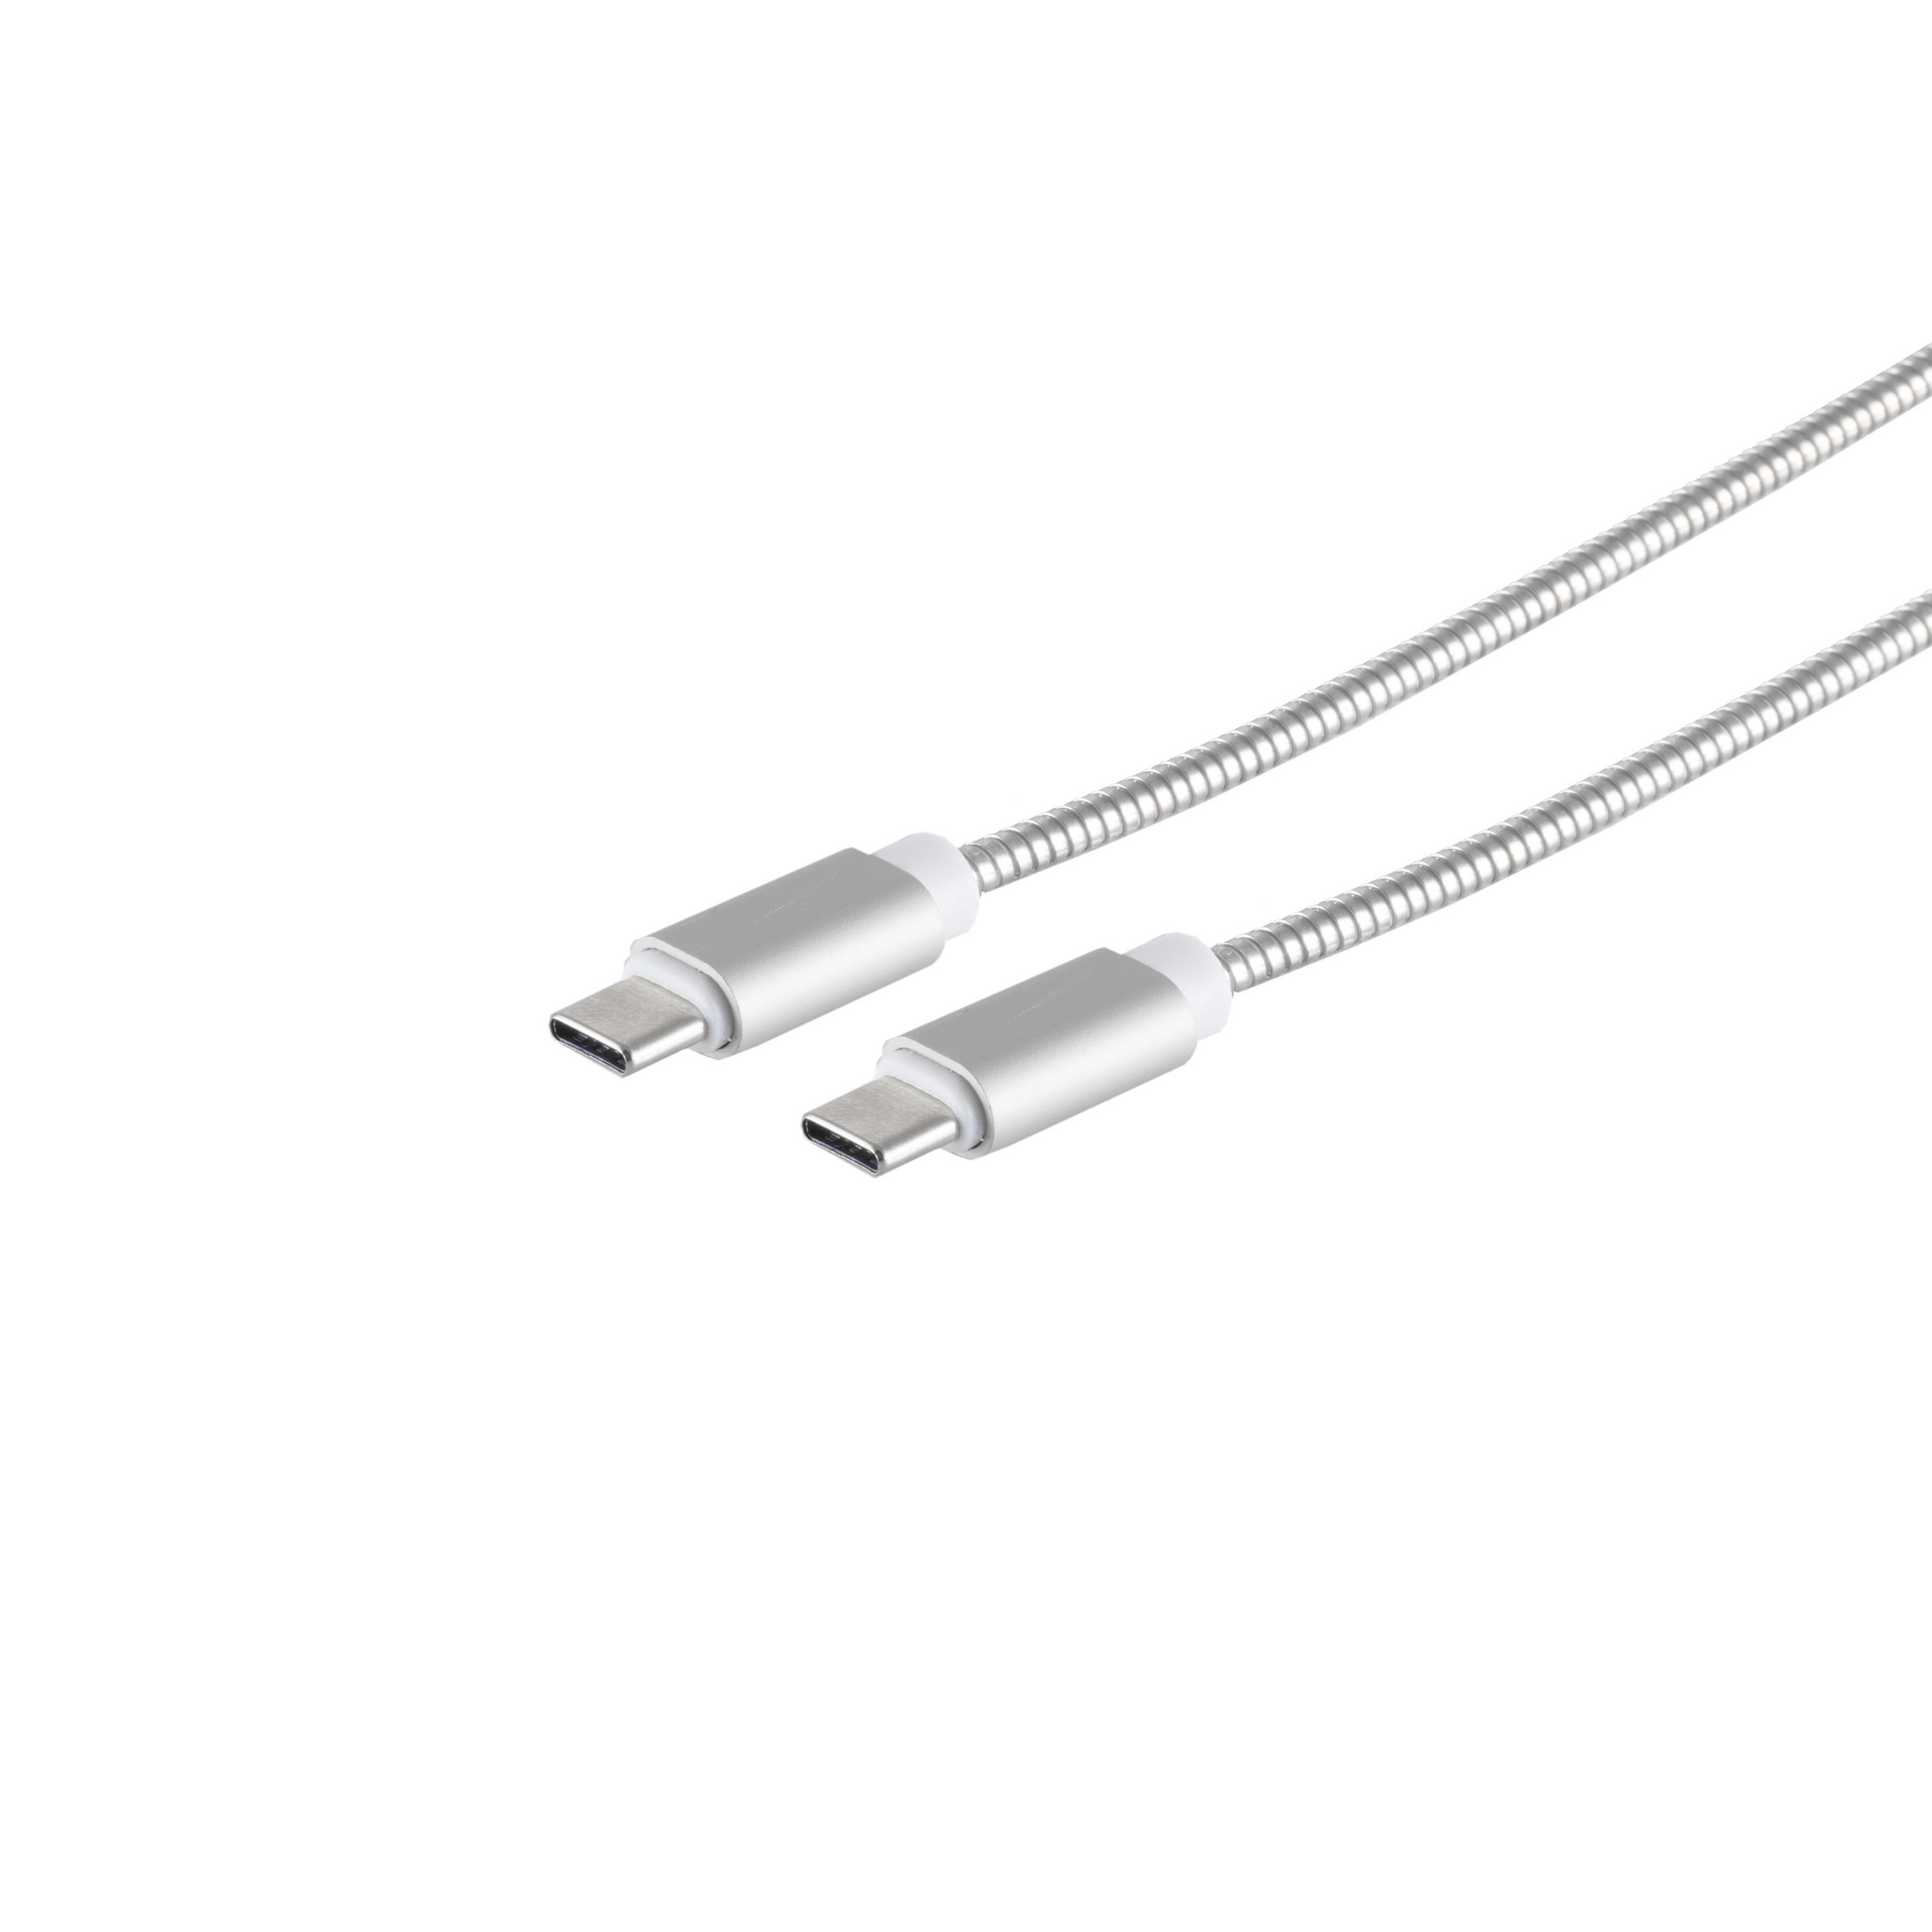 C Kabel CONNECTIVITY Kabel Steel 1m Stecker USB S/CONN USB USB Lade-Sync MAXIMUM C/ Silber